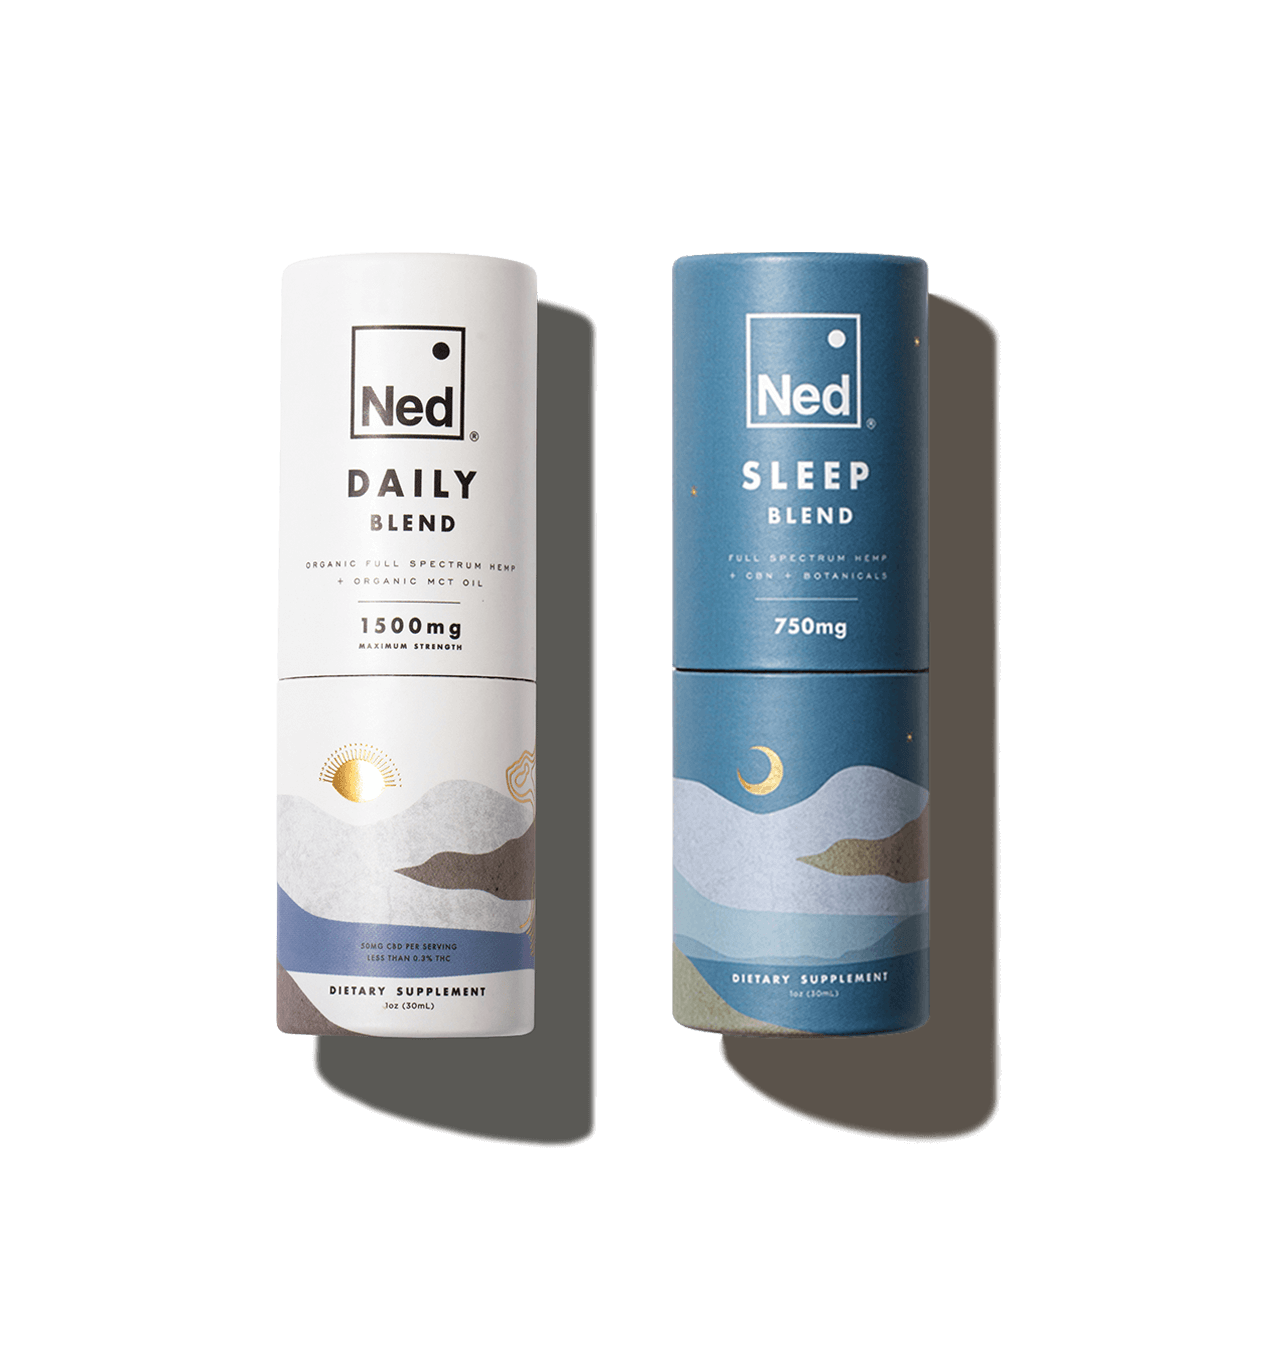 Ned Sleep Set with 1500mg Daily Blend Organic Full Spectrum Hemp Oil and CBN Sleep Blend